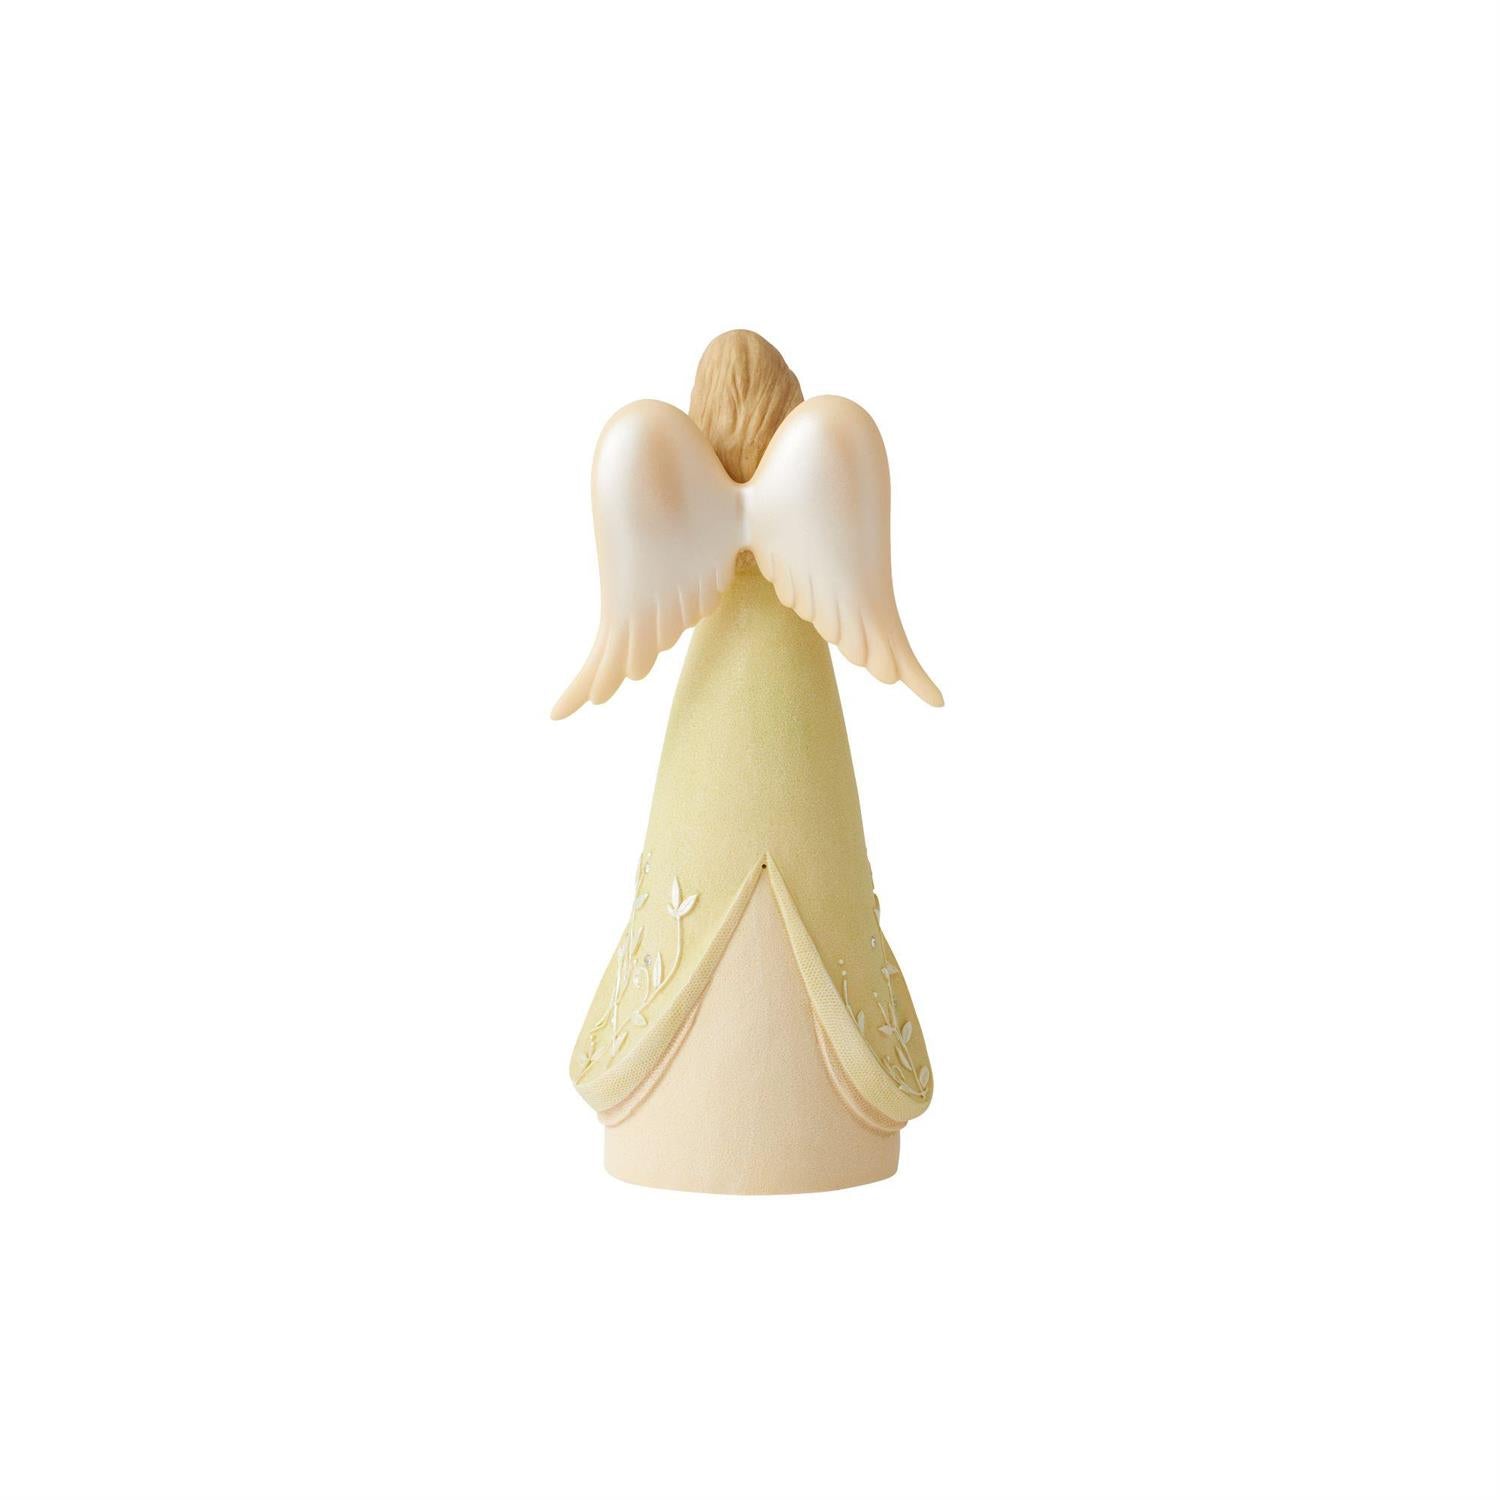 Angel, Adoption Choosen Family 7.5" Figurine